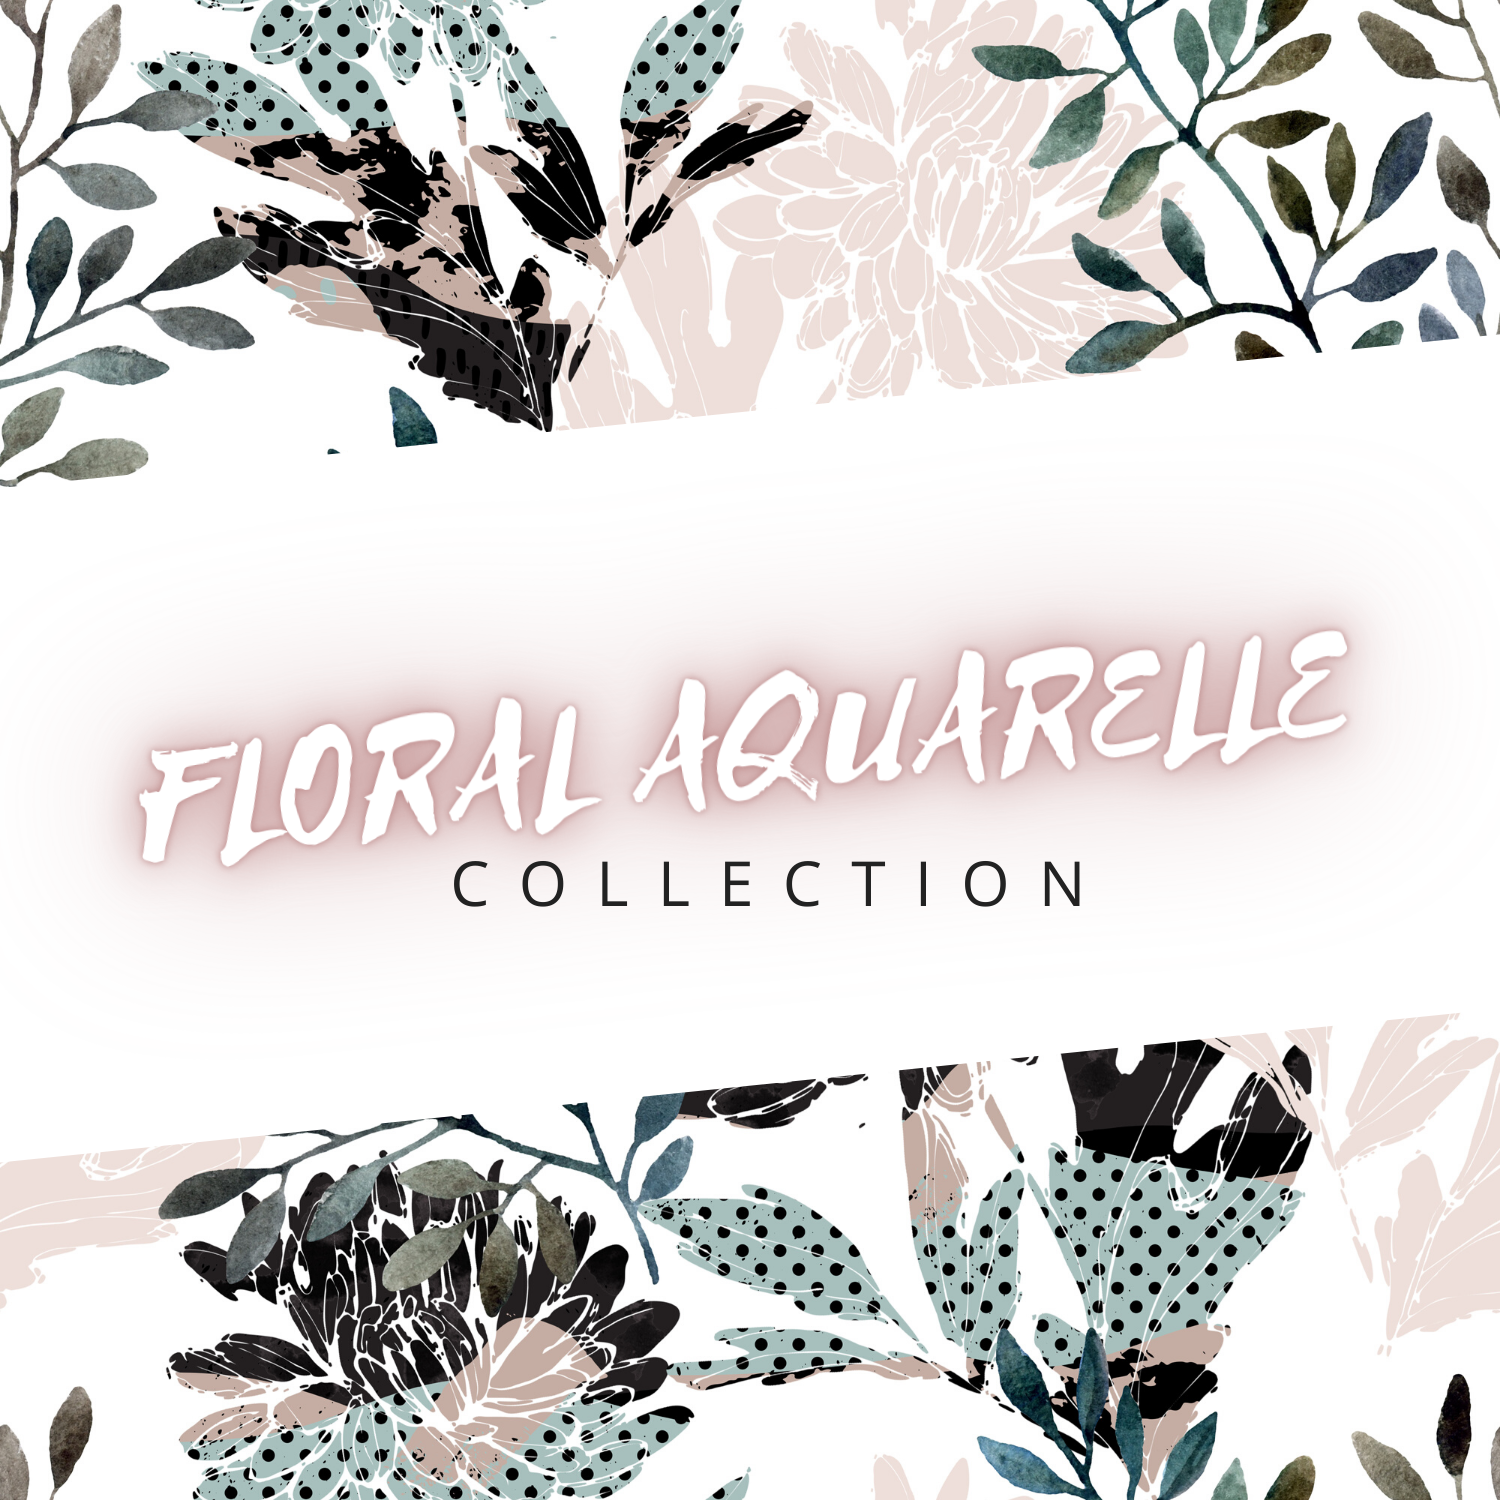 Floral Aquarelle